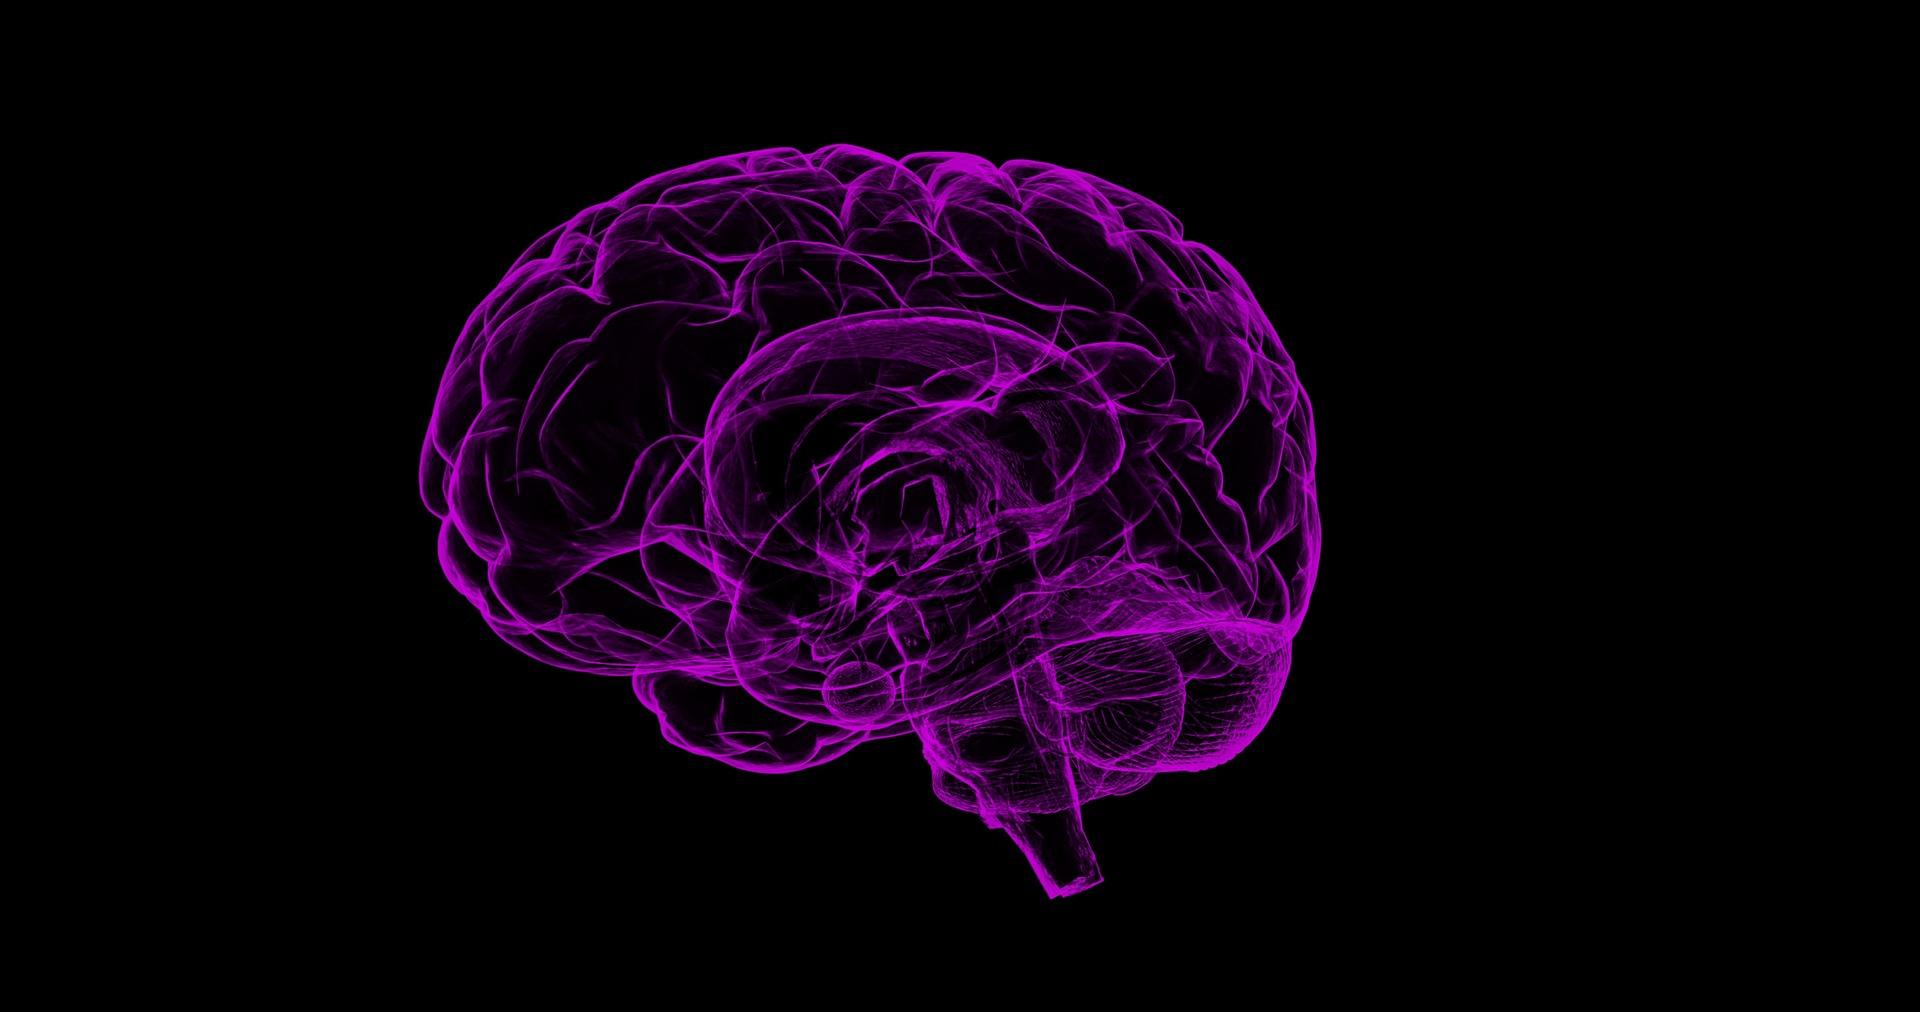 neon purple outline of brain on black background